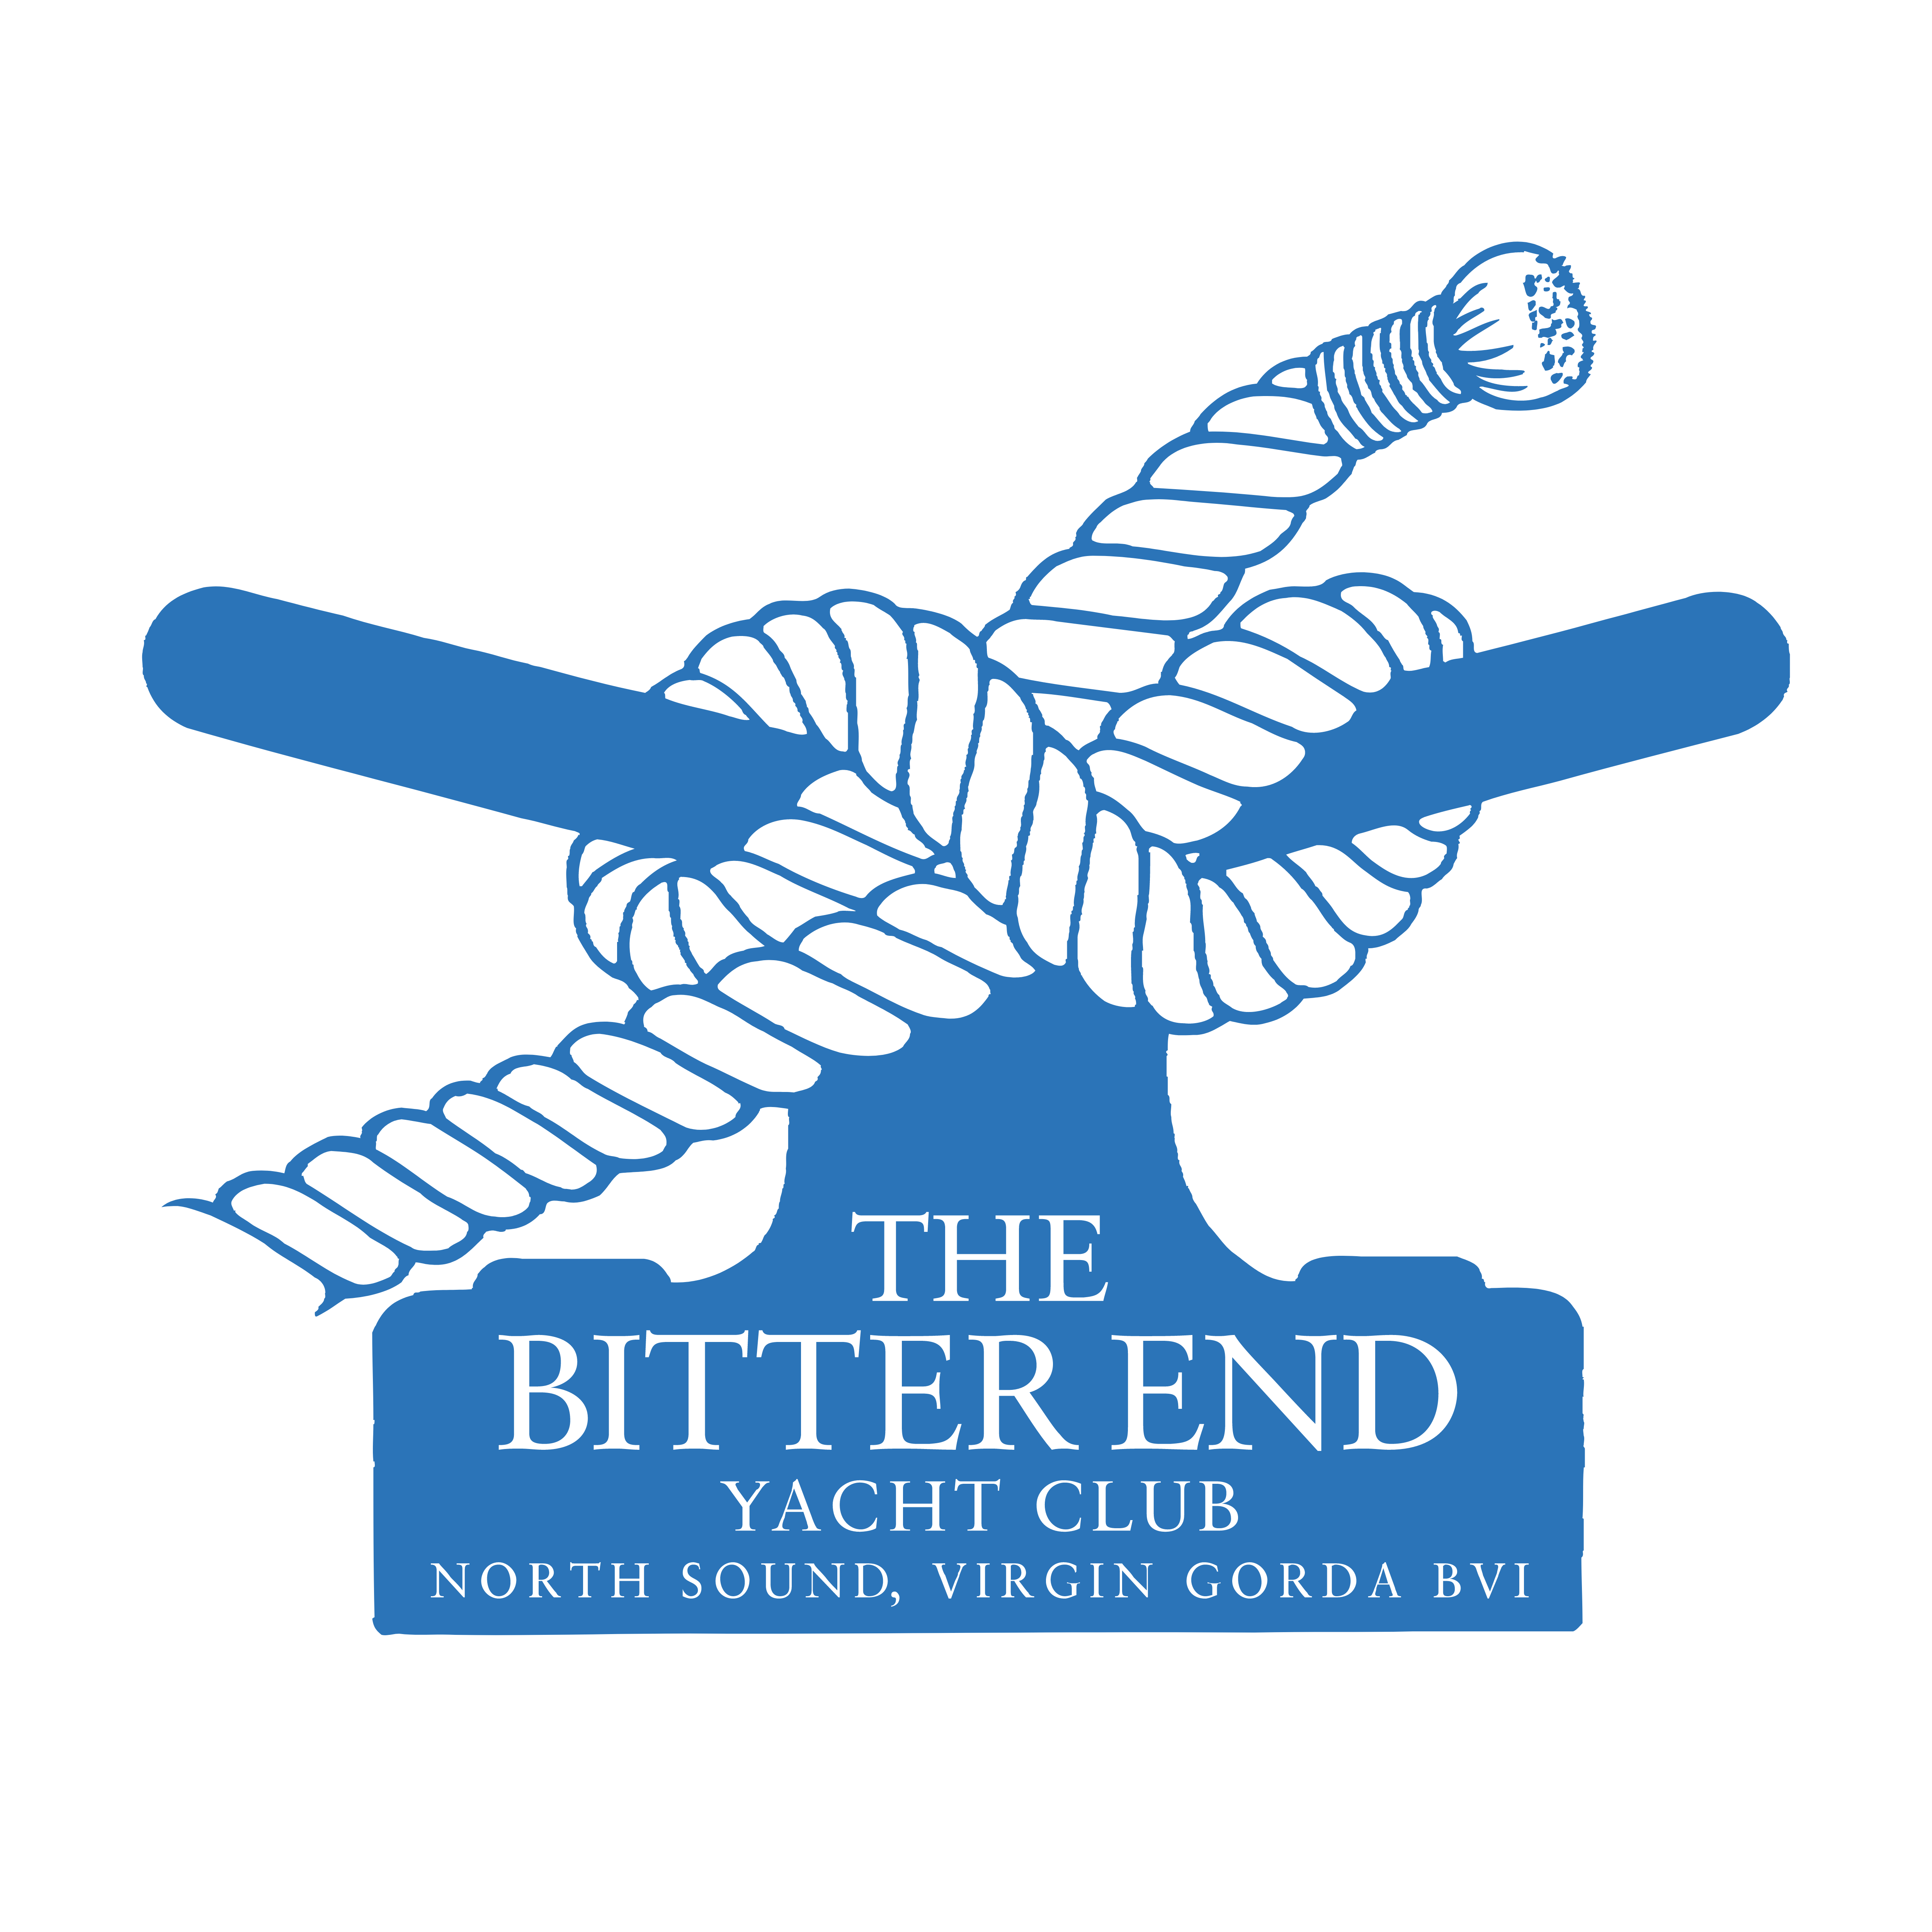 bitter end yacht club logo